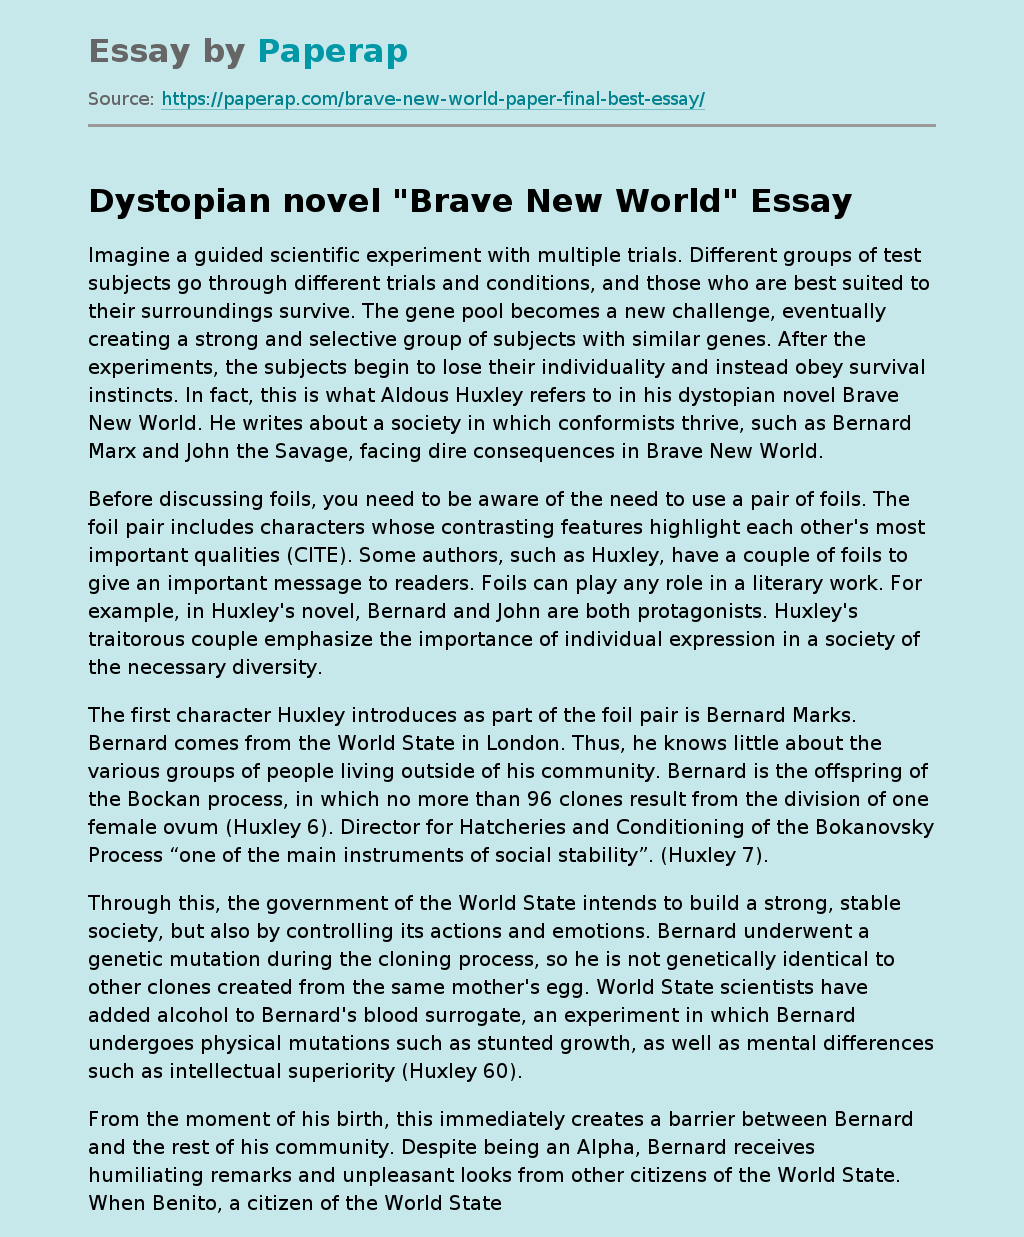 Dystopian novel "Brave New World"